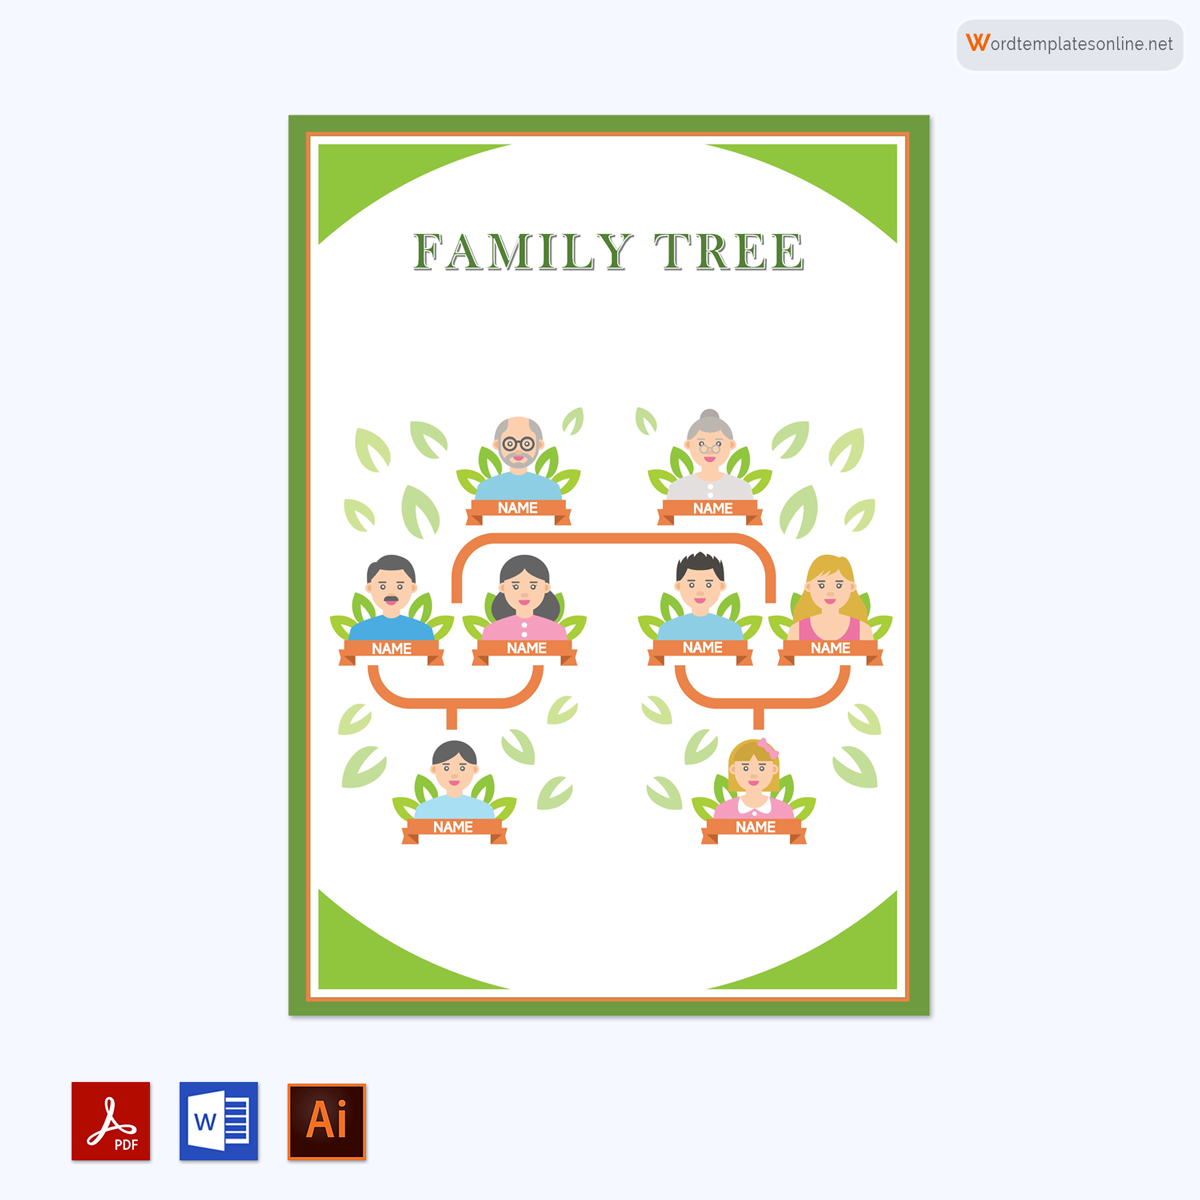  family tree template canva 02